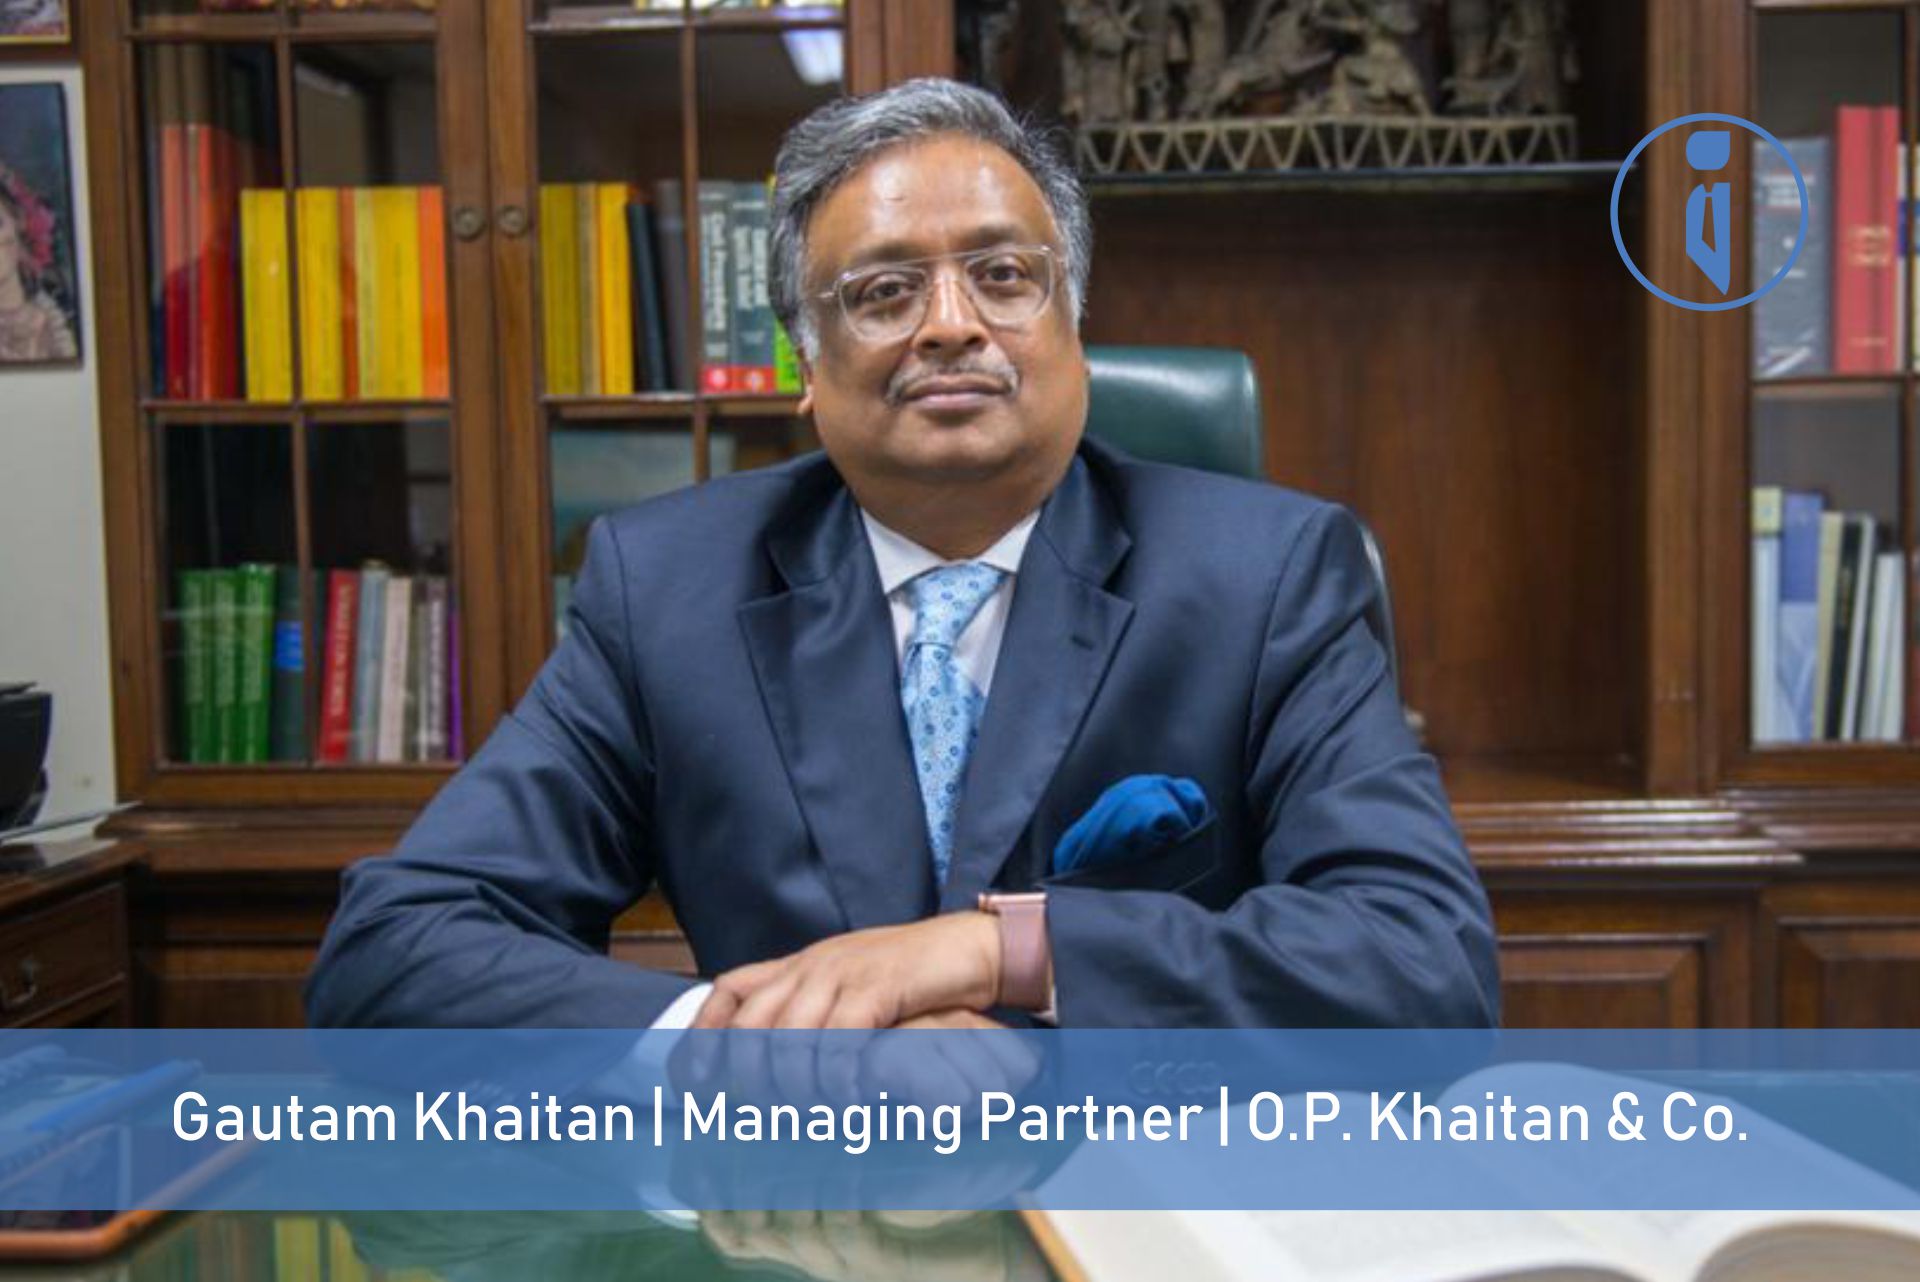 O.P. KHAITAN & CO:  BUILT ON THE WISDOM OF GENERATIONS